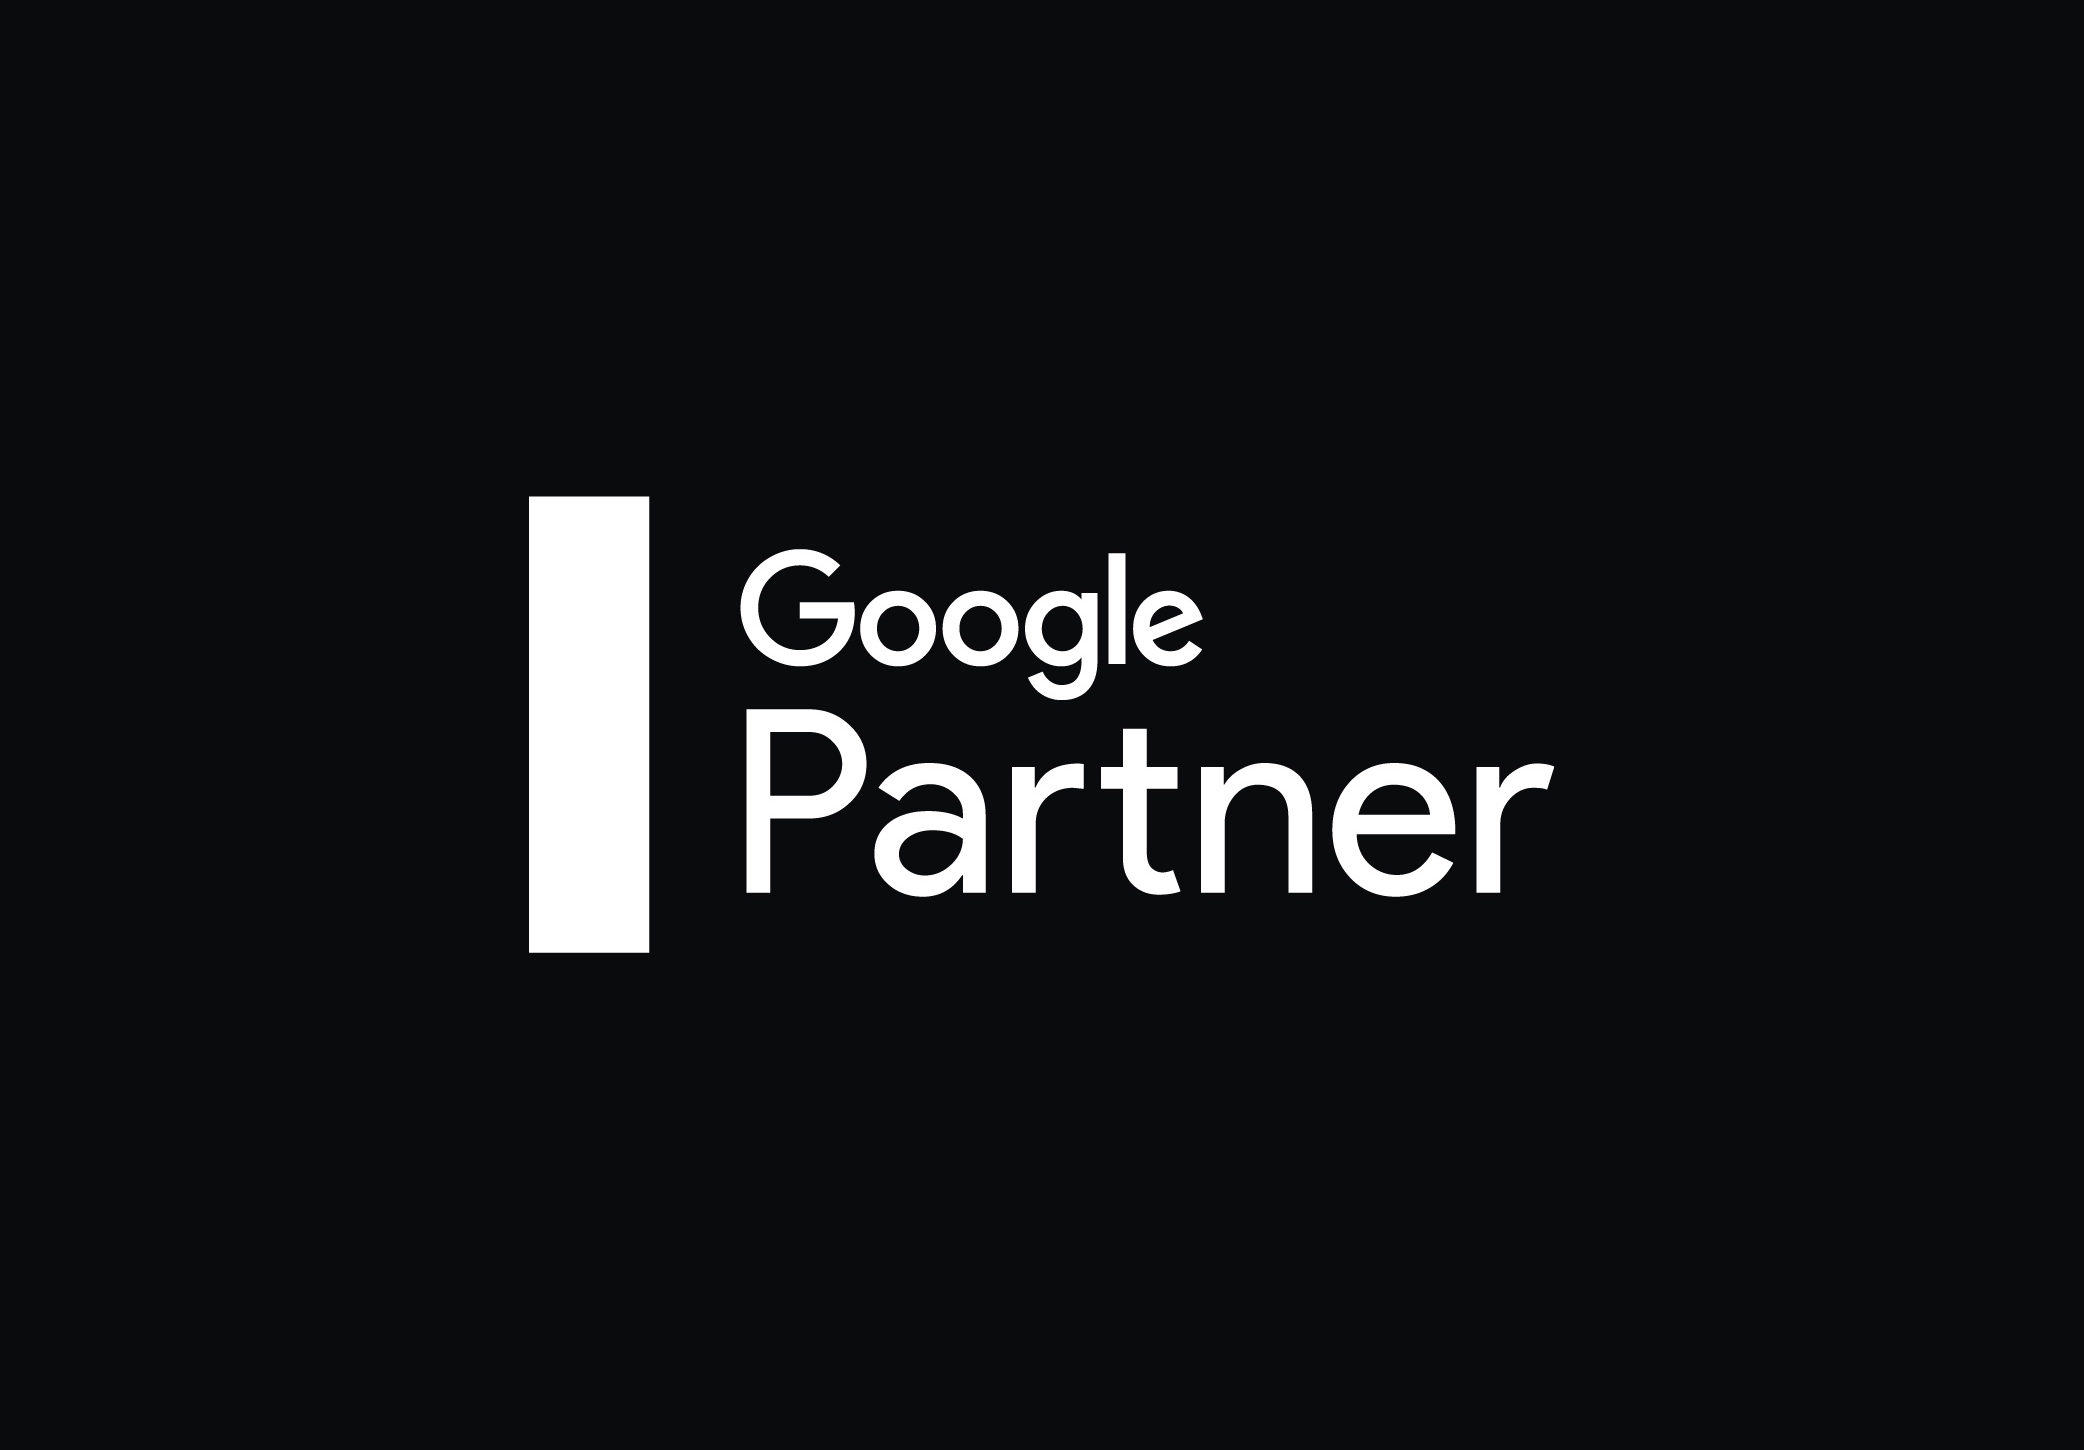 Google-Partner-aspect-ratio-670-466